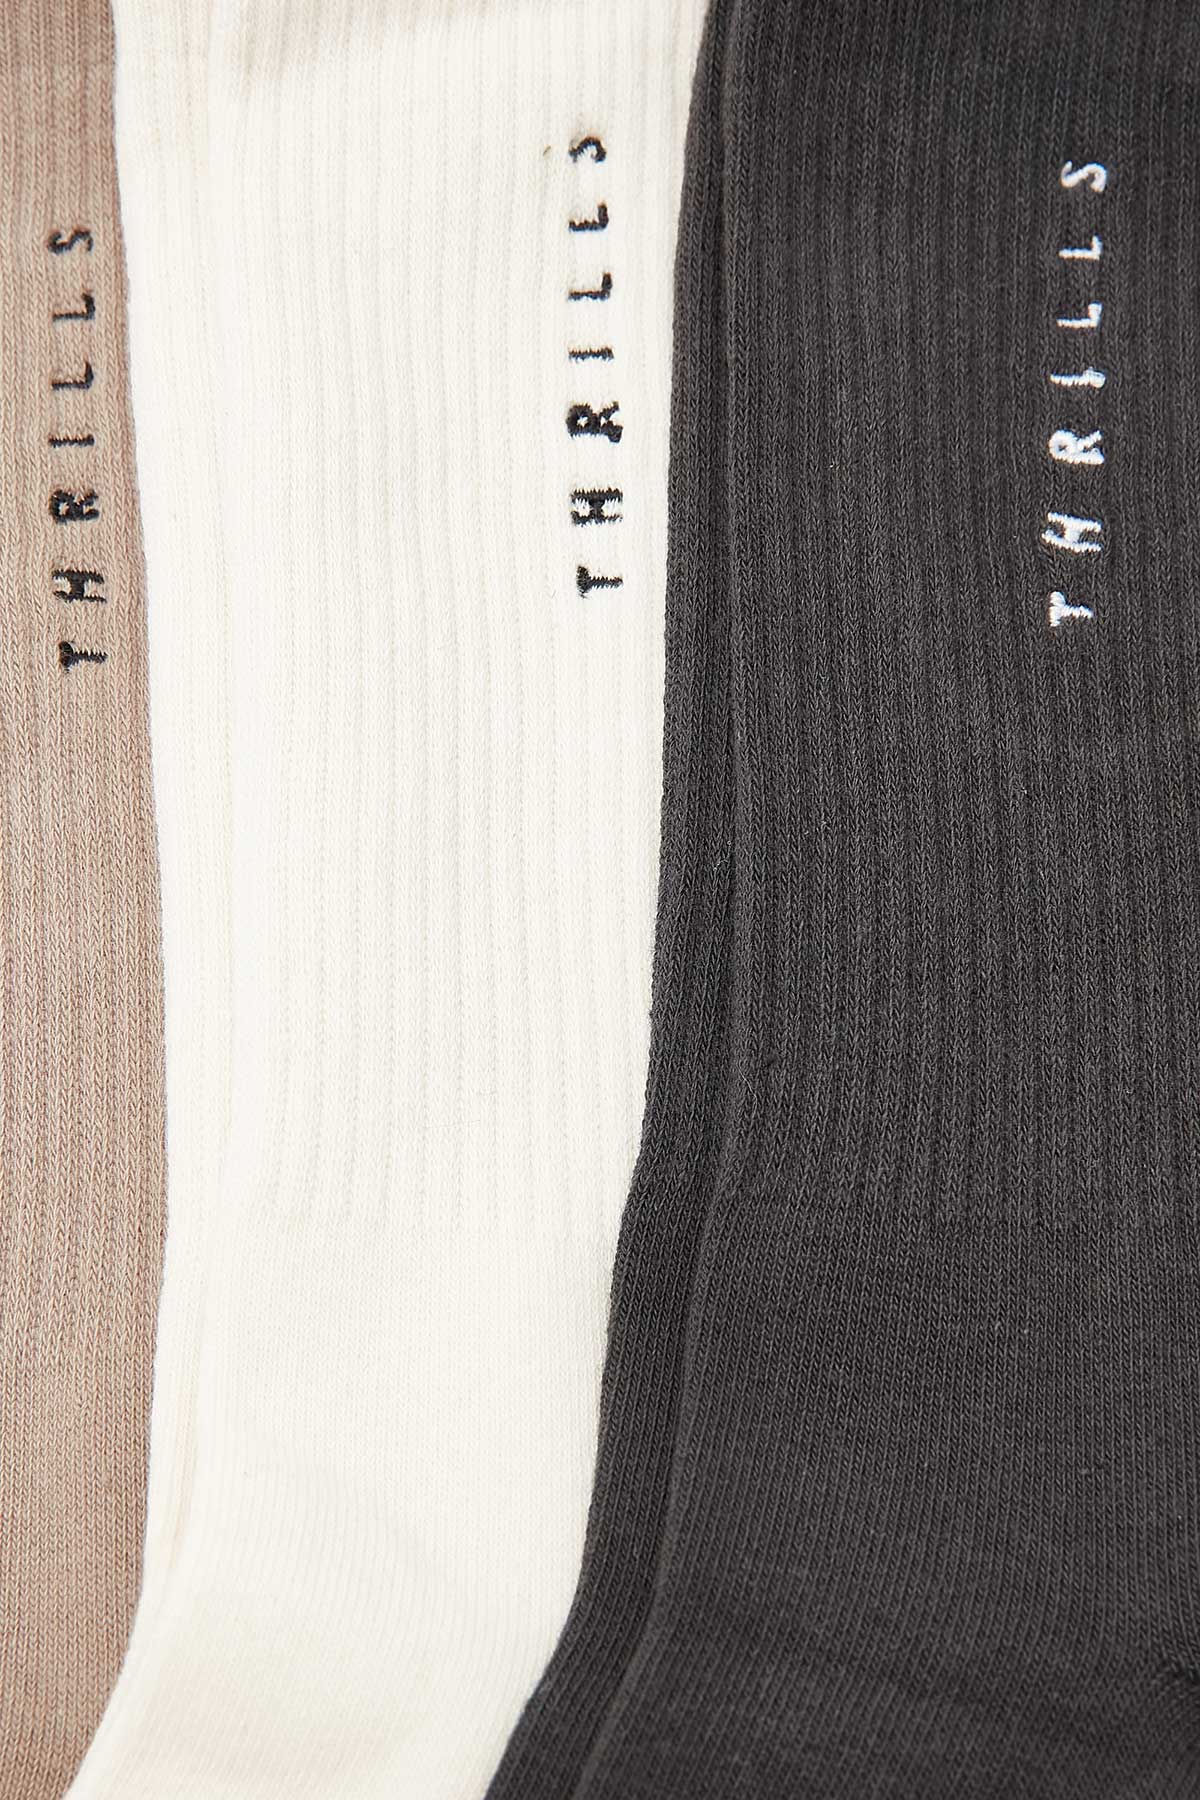 Thrills Minimal Socks 3 Pack Army Fade/Dirty White/Merch Black